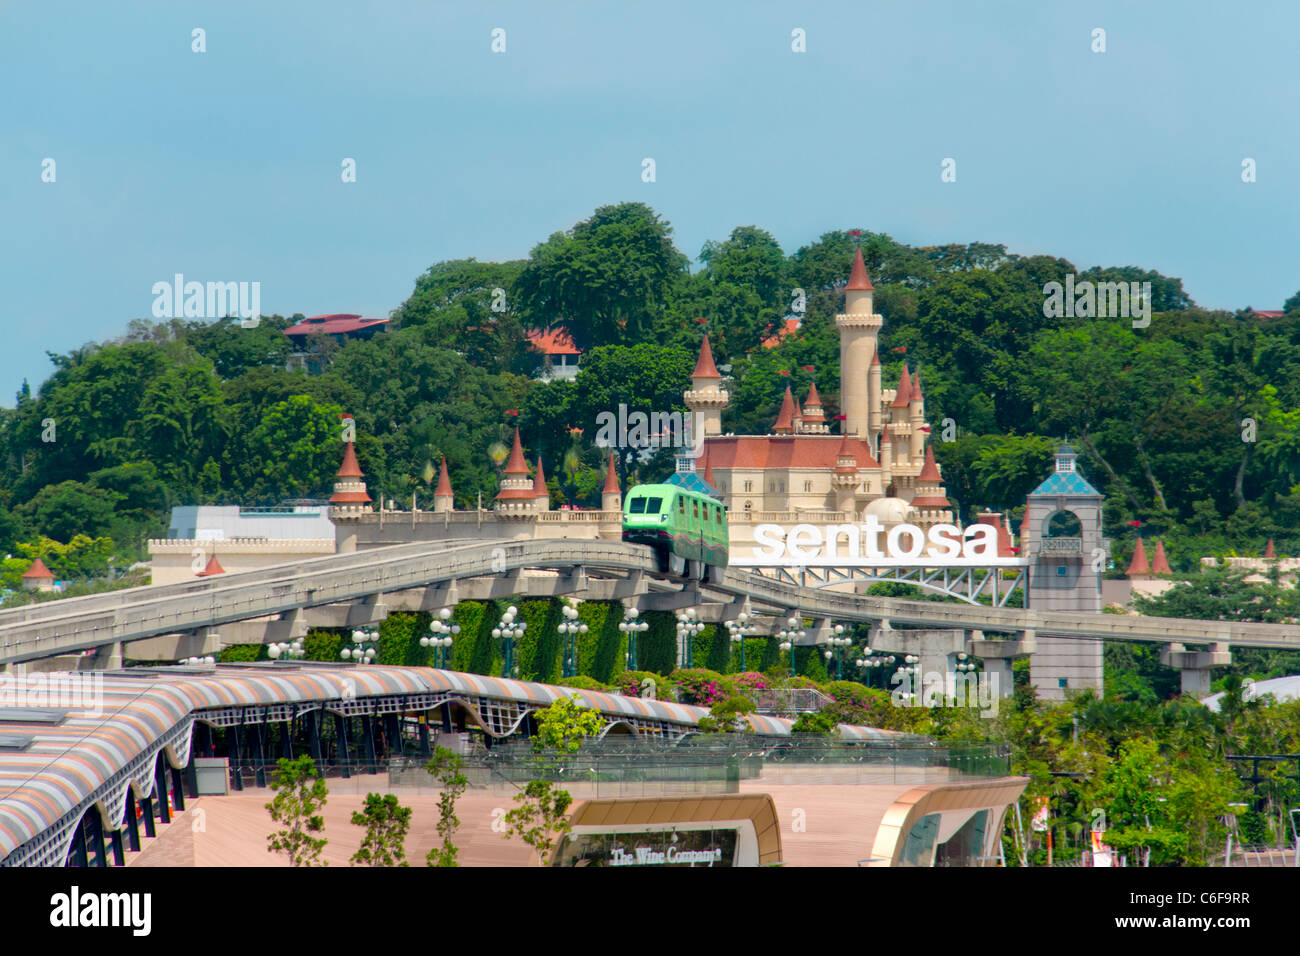 Skytrain at the gate of Sentosa Island, Singapore Stock Photo